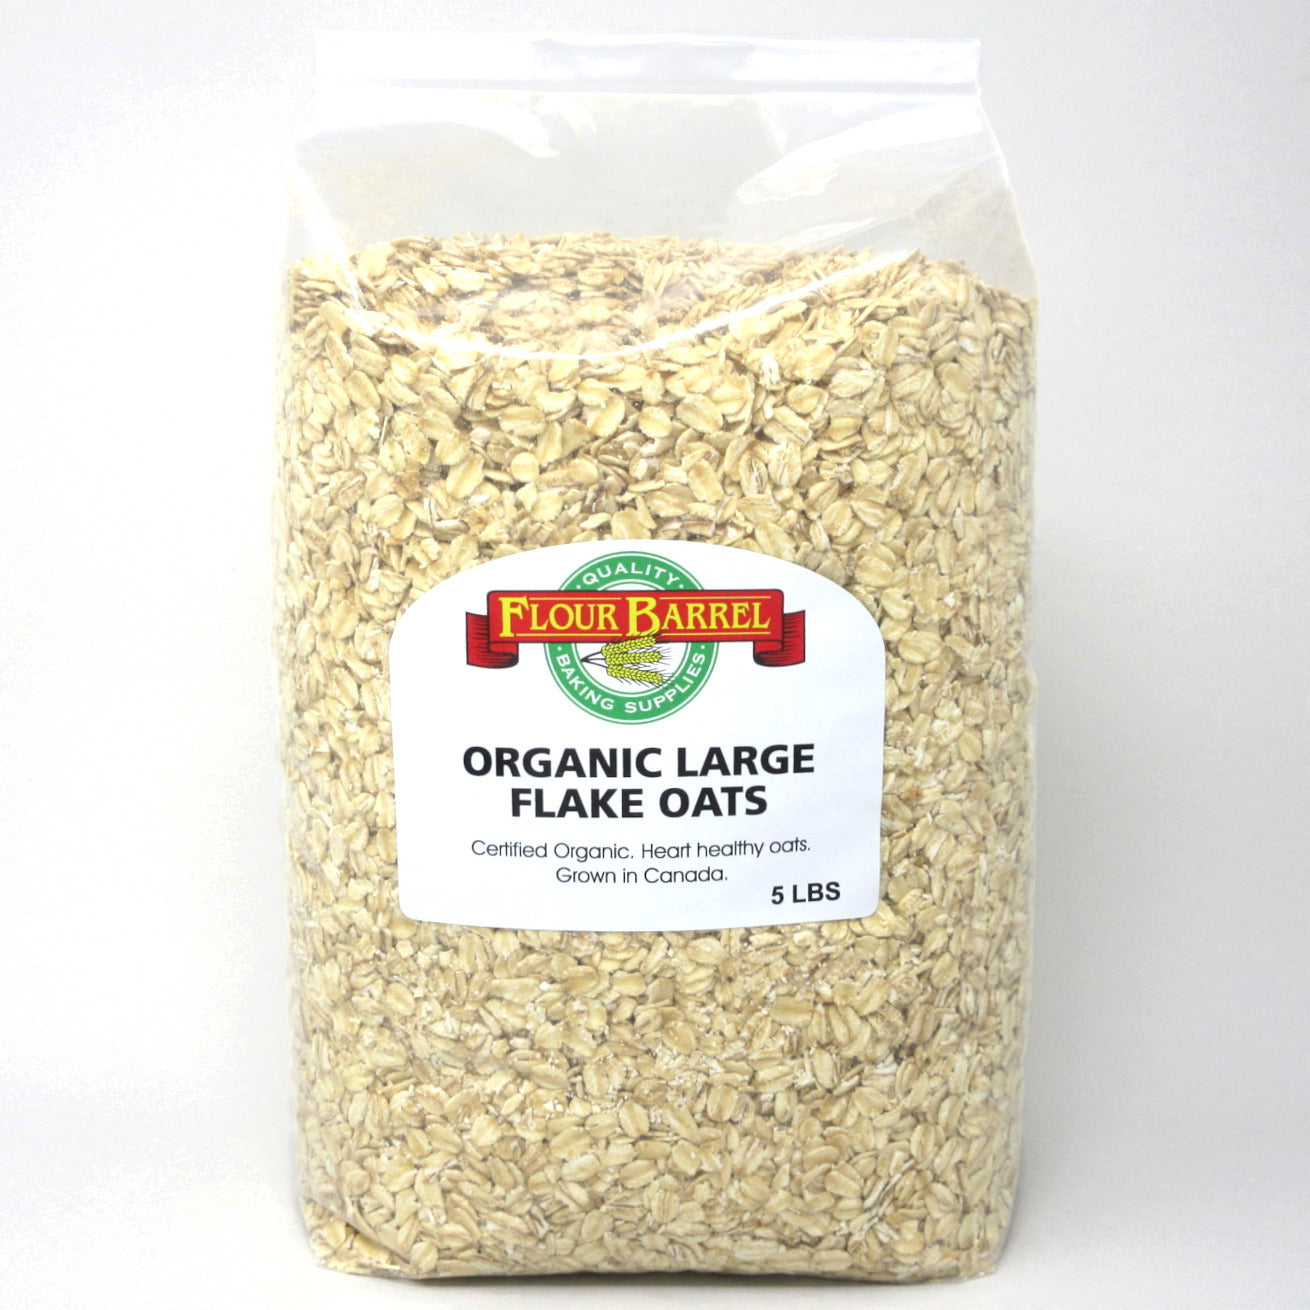 Flour Barrel product image - Organic Large Flake Oats